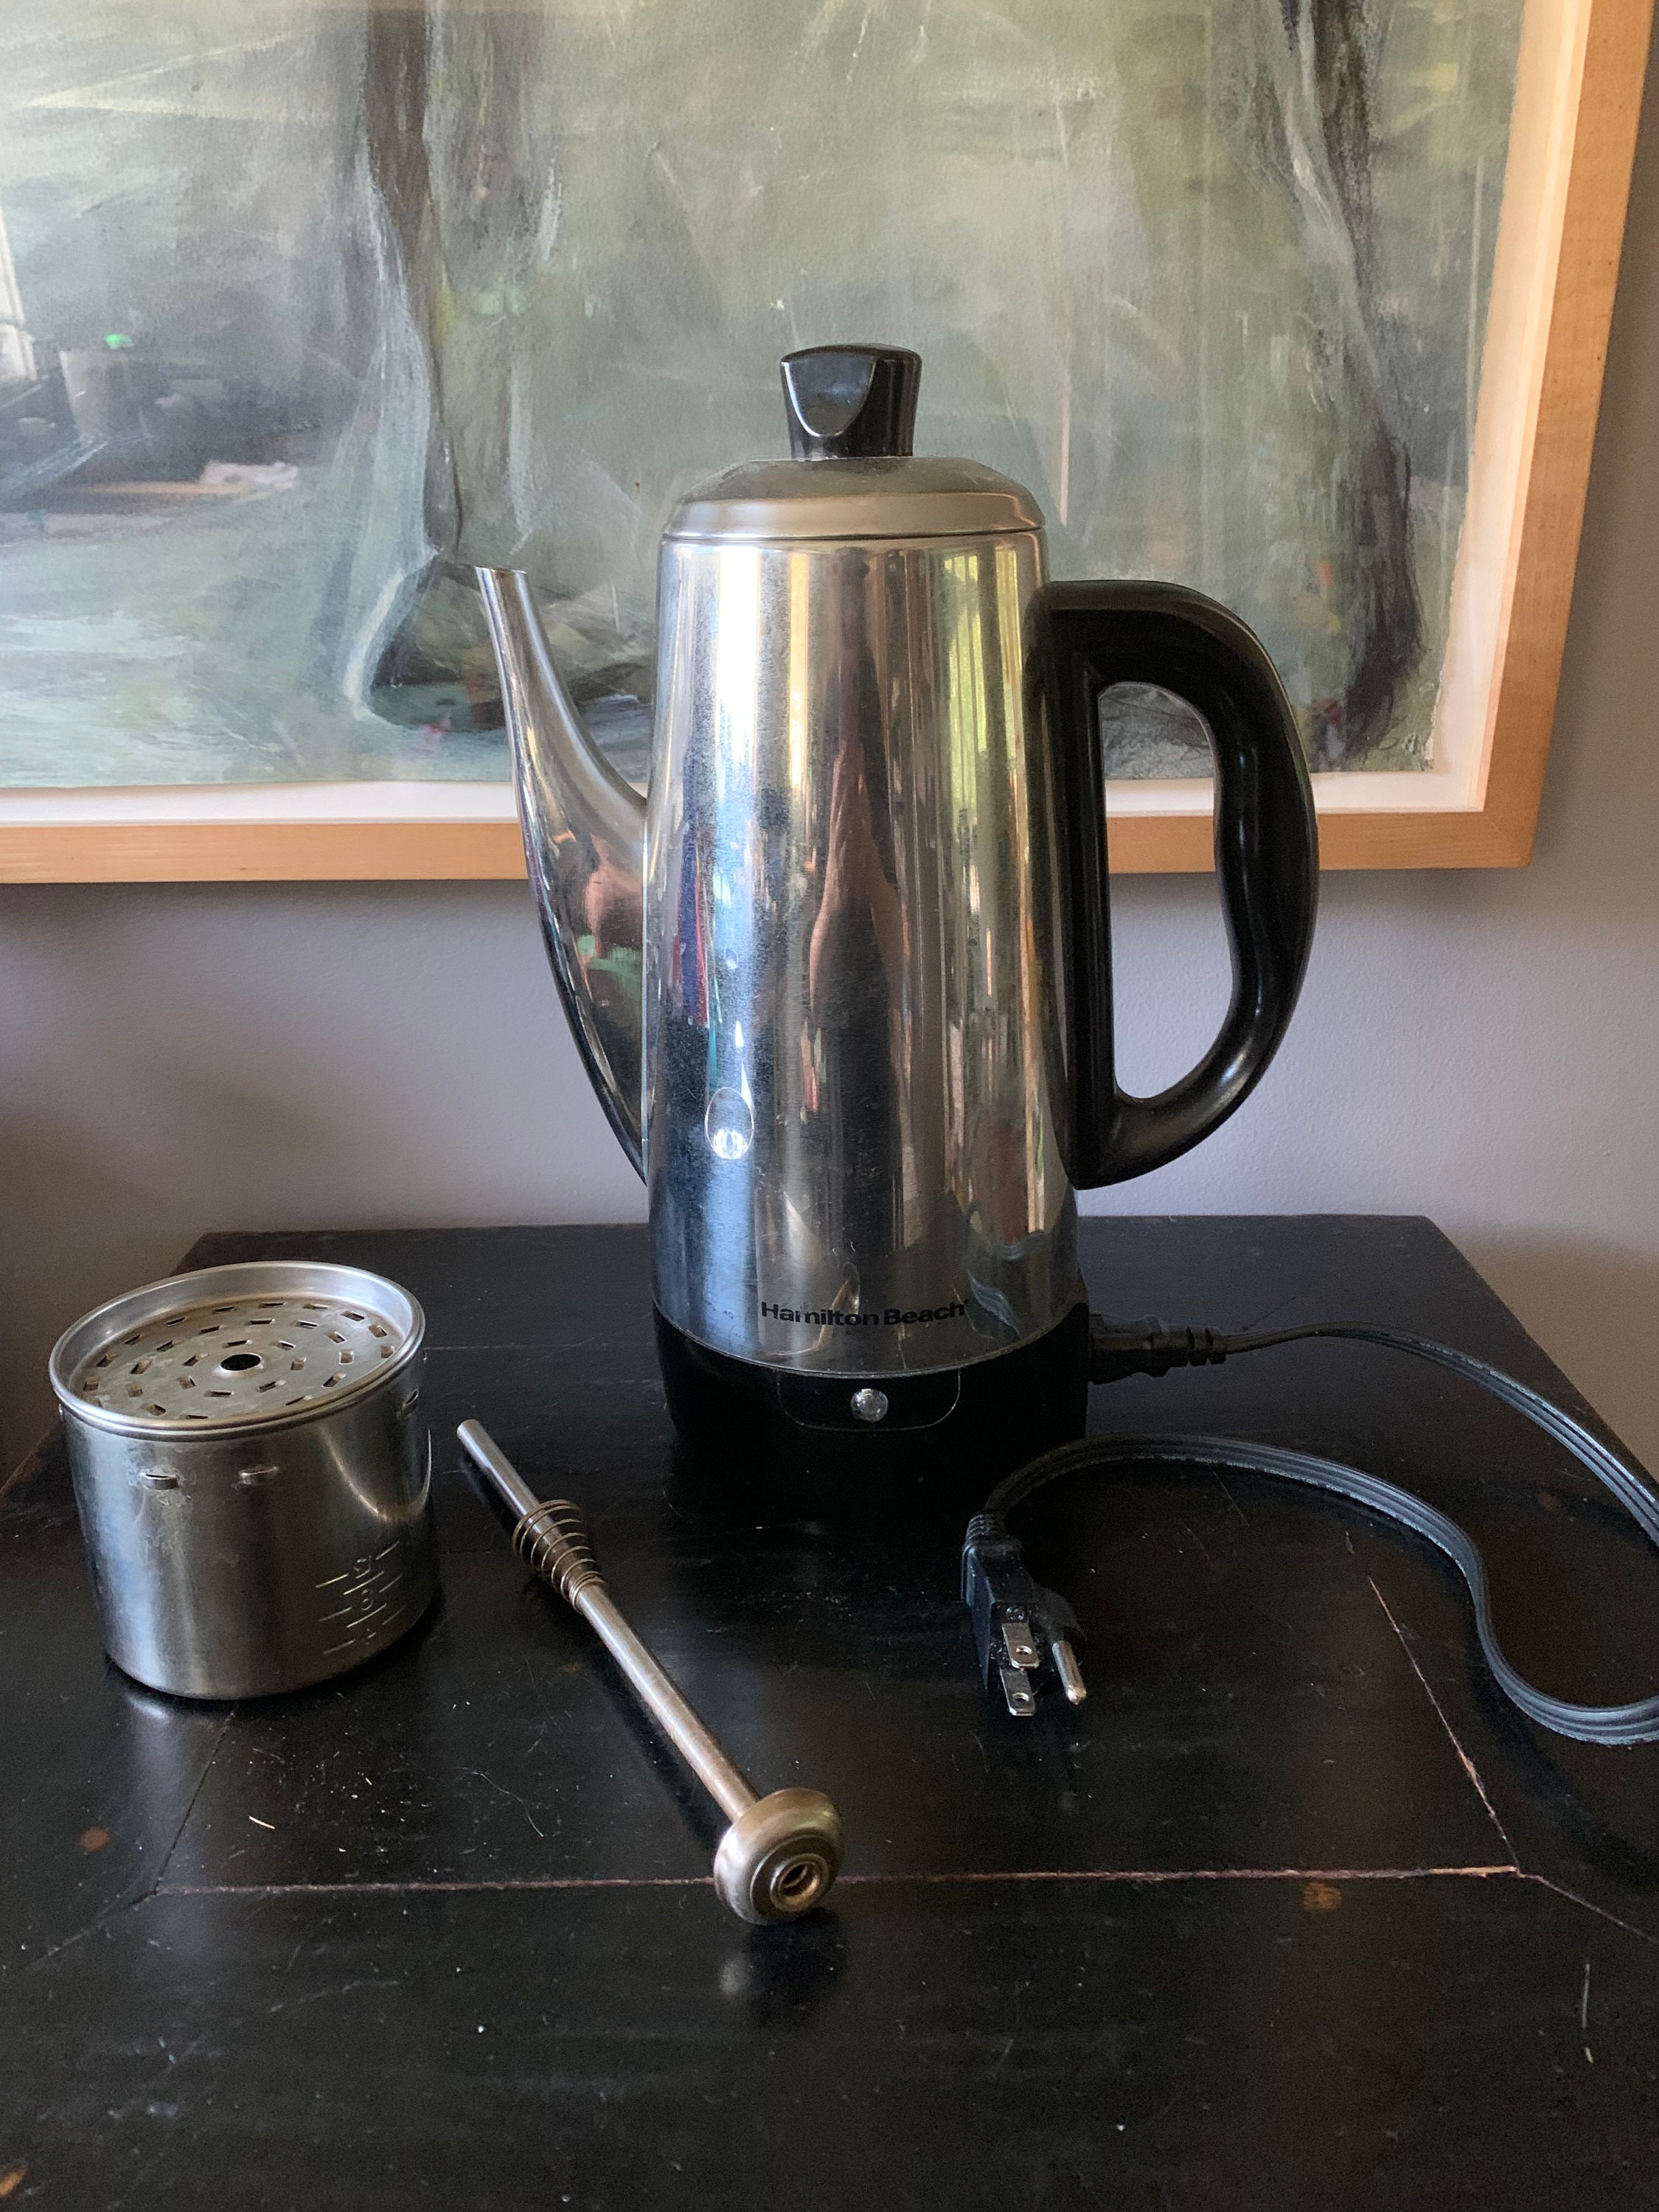 Hamilton Beach Stainless Steel Percolator Coffee Maker, 2-12 cup